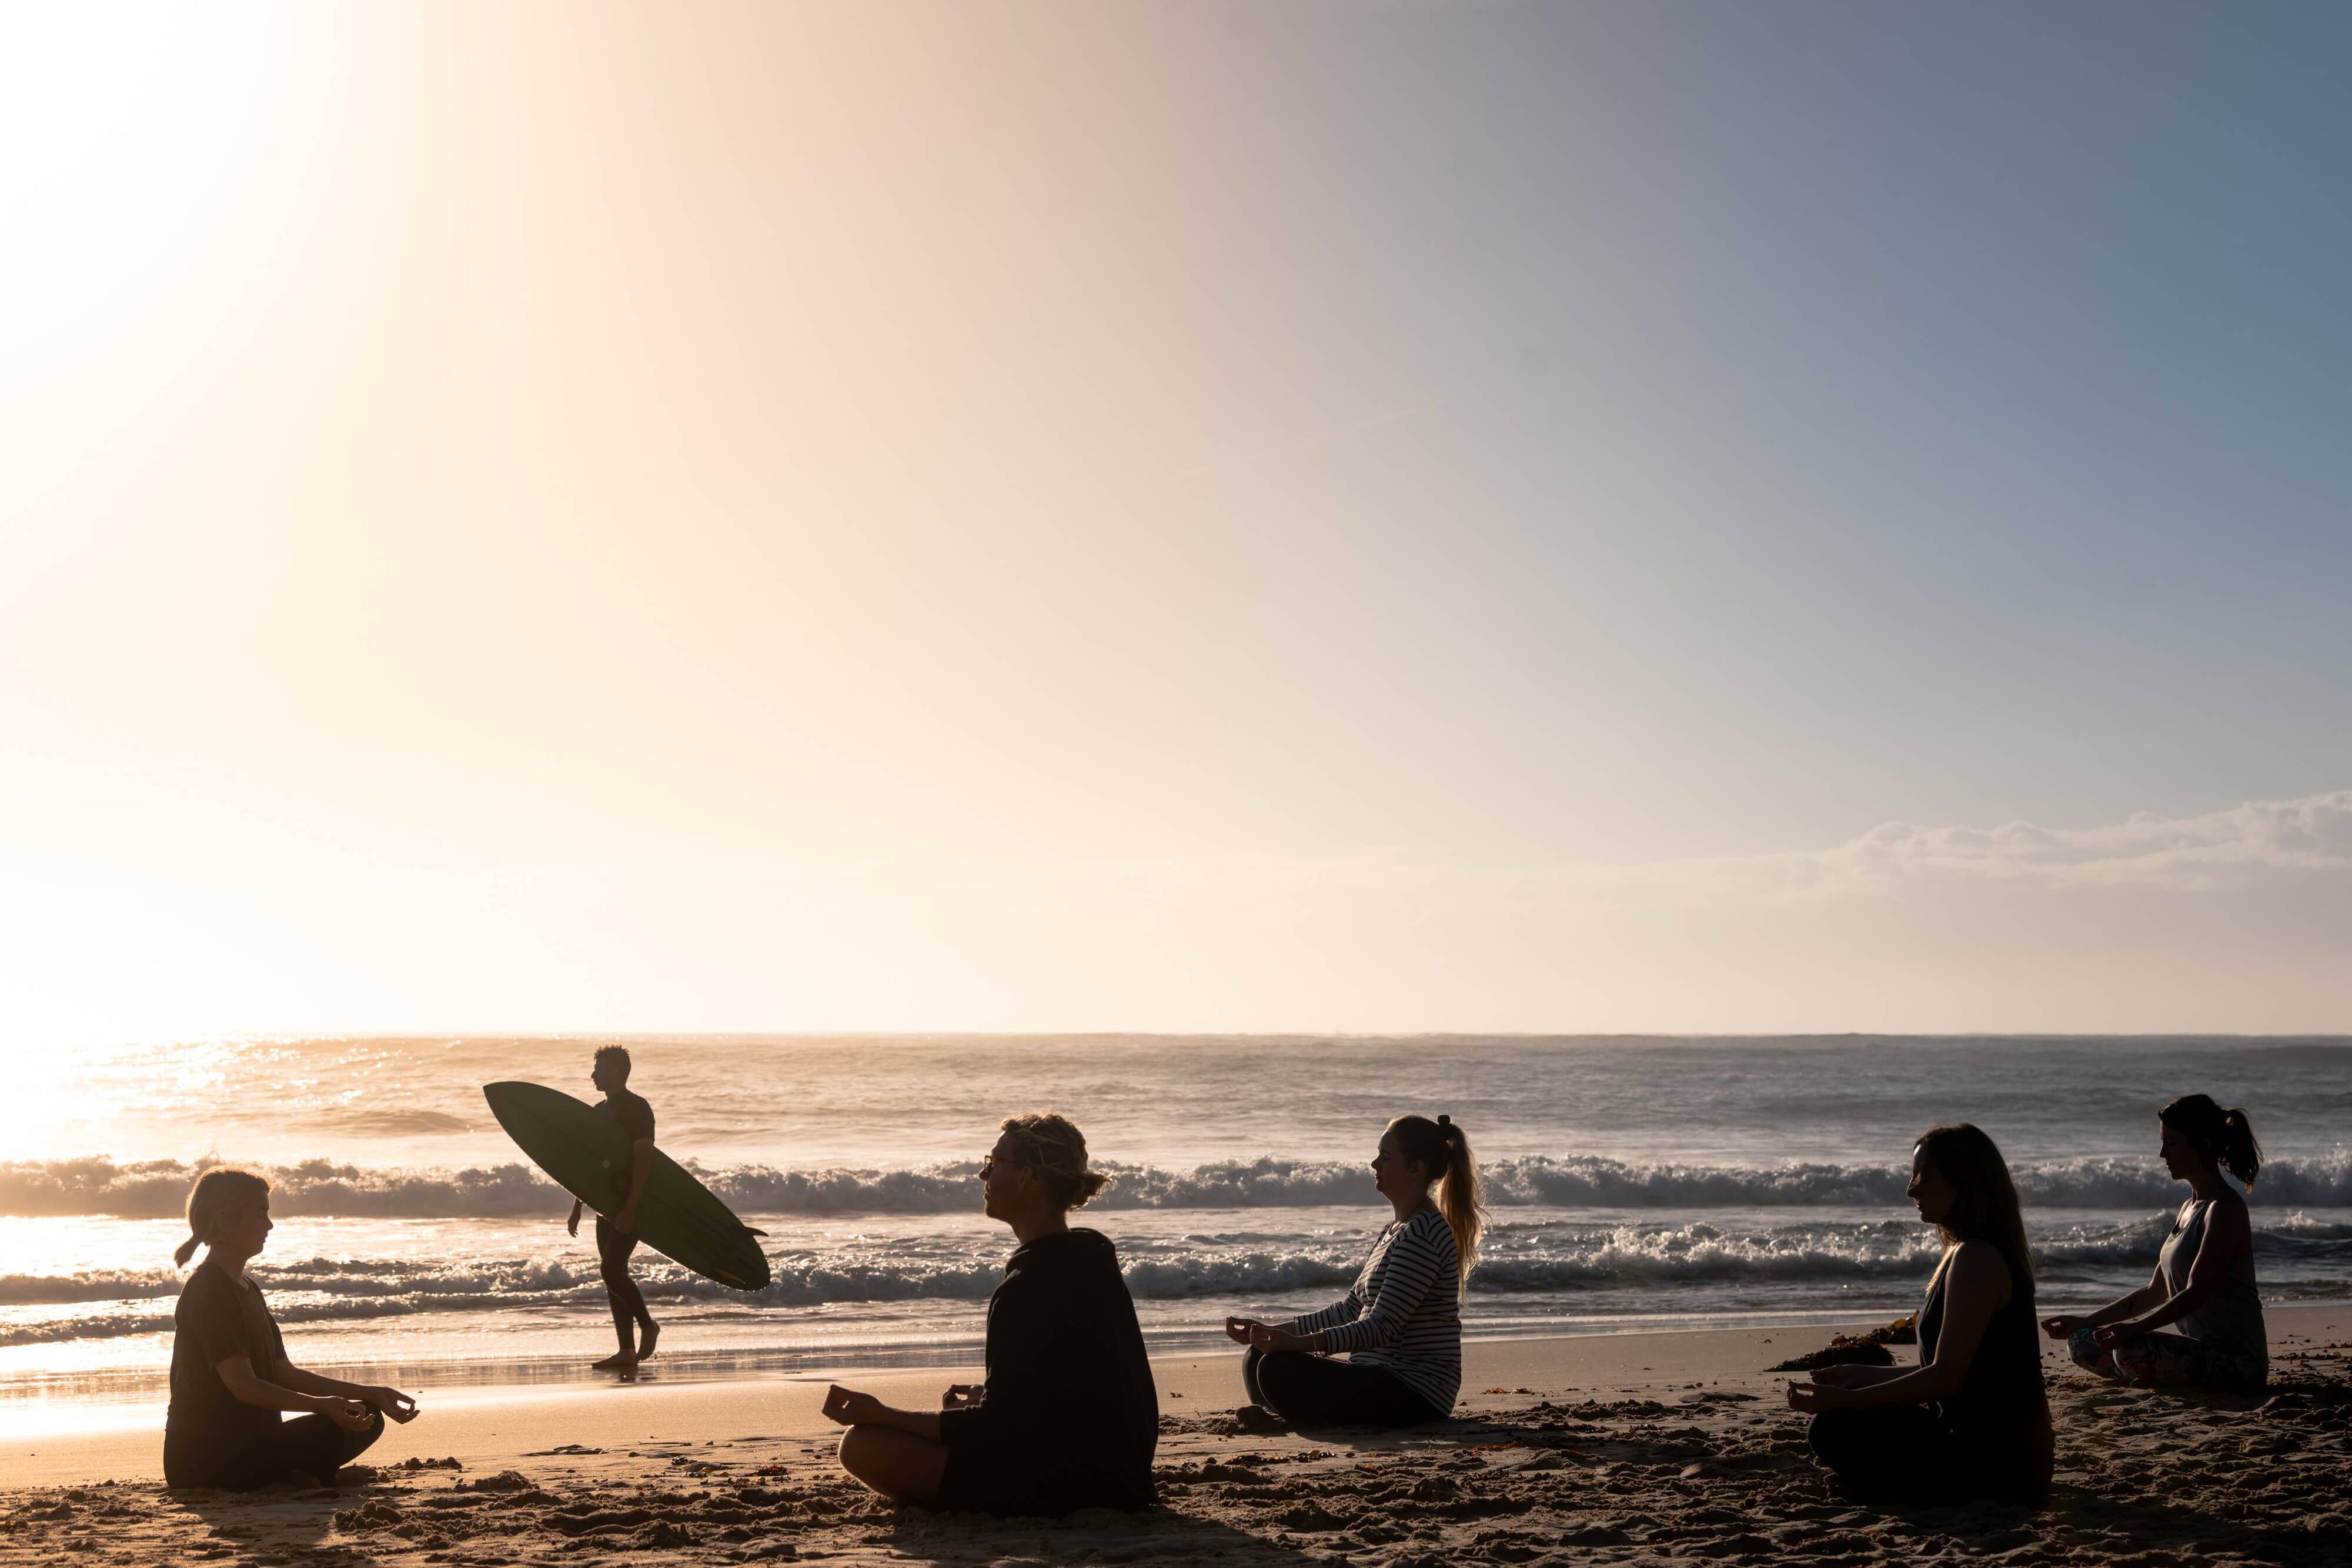 poeple doing yoga and surfing beachside at sunrise